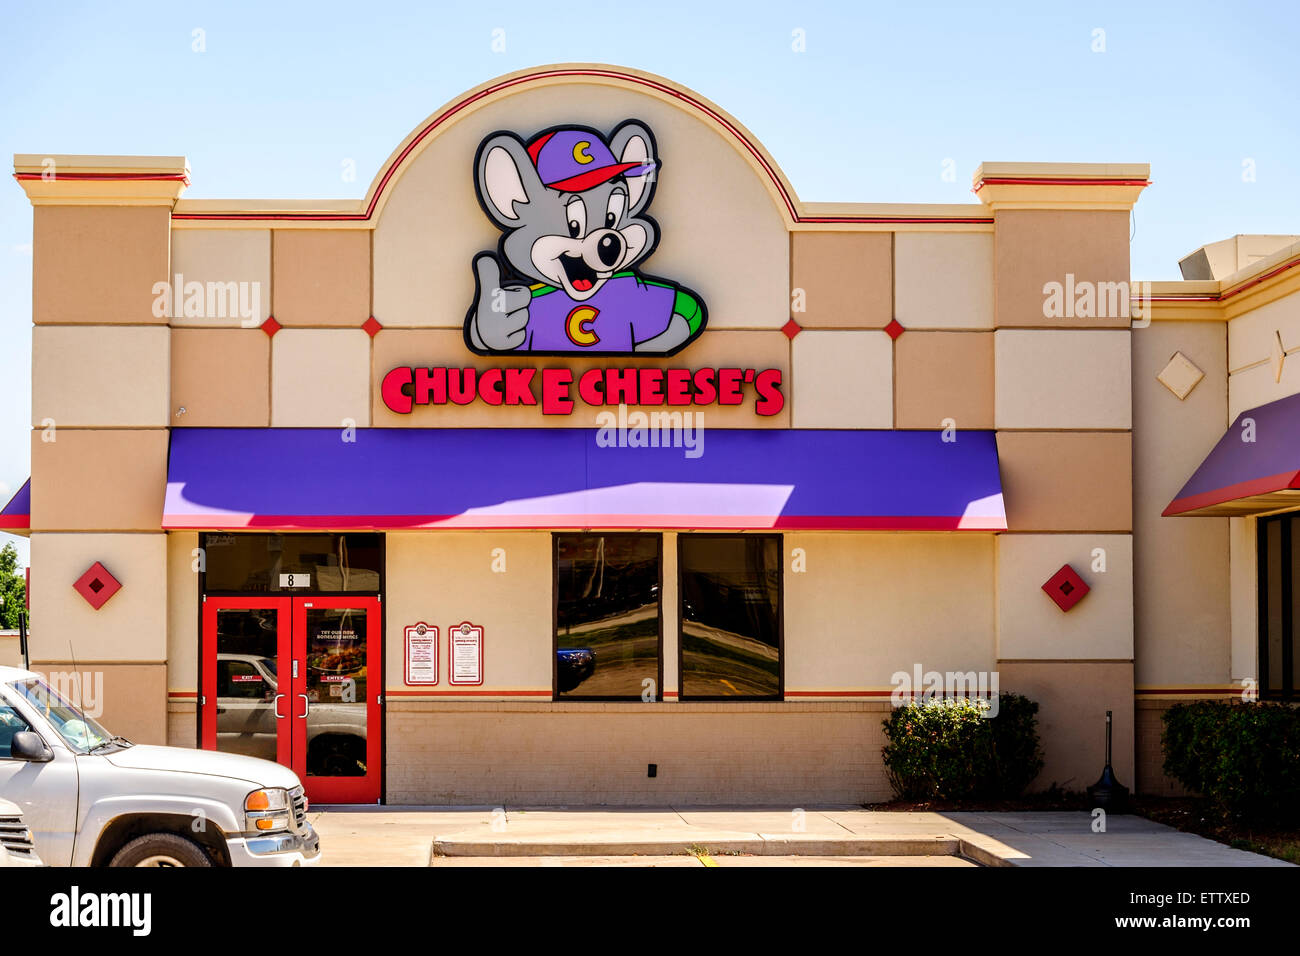 The exterior storefront of a ChuckECheese's, a pizzaria and family entertainment establishment. Oklahoma City, Oklahoma, USA. Stock Photo